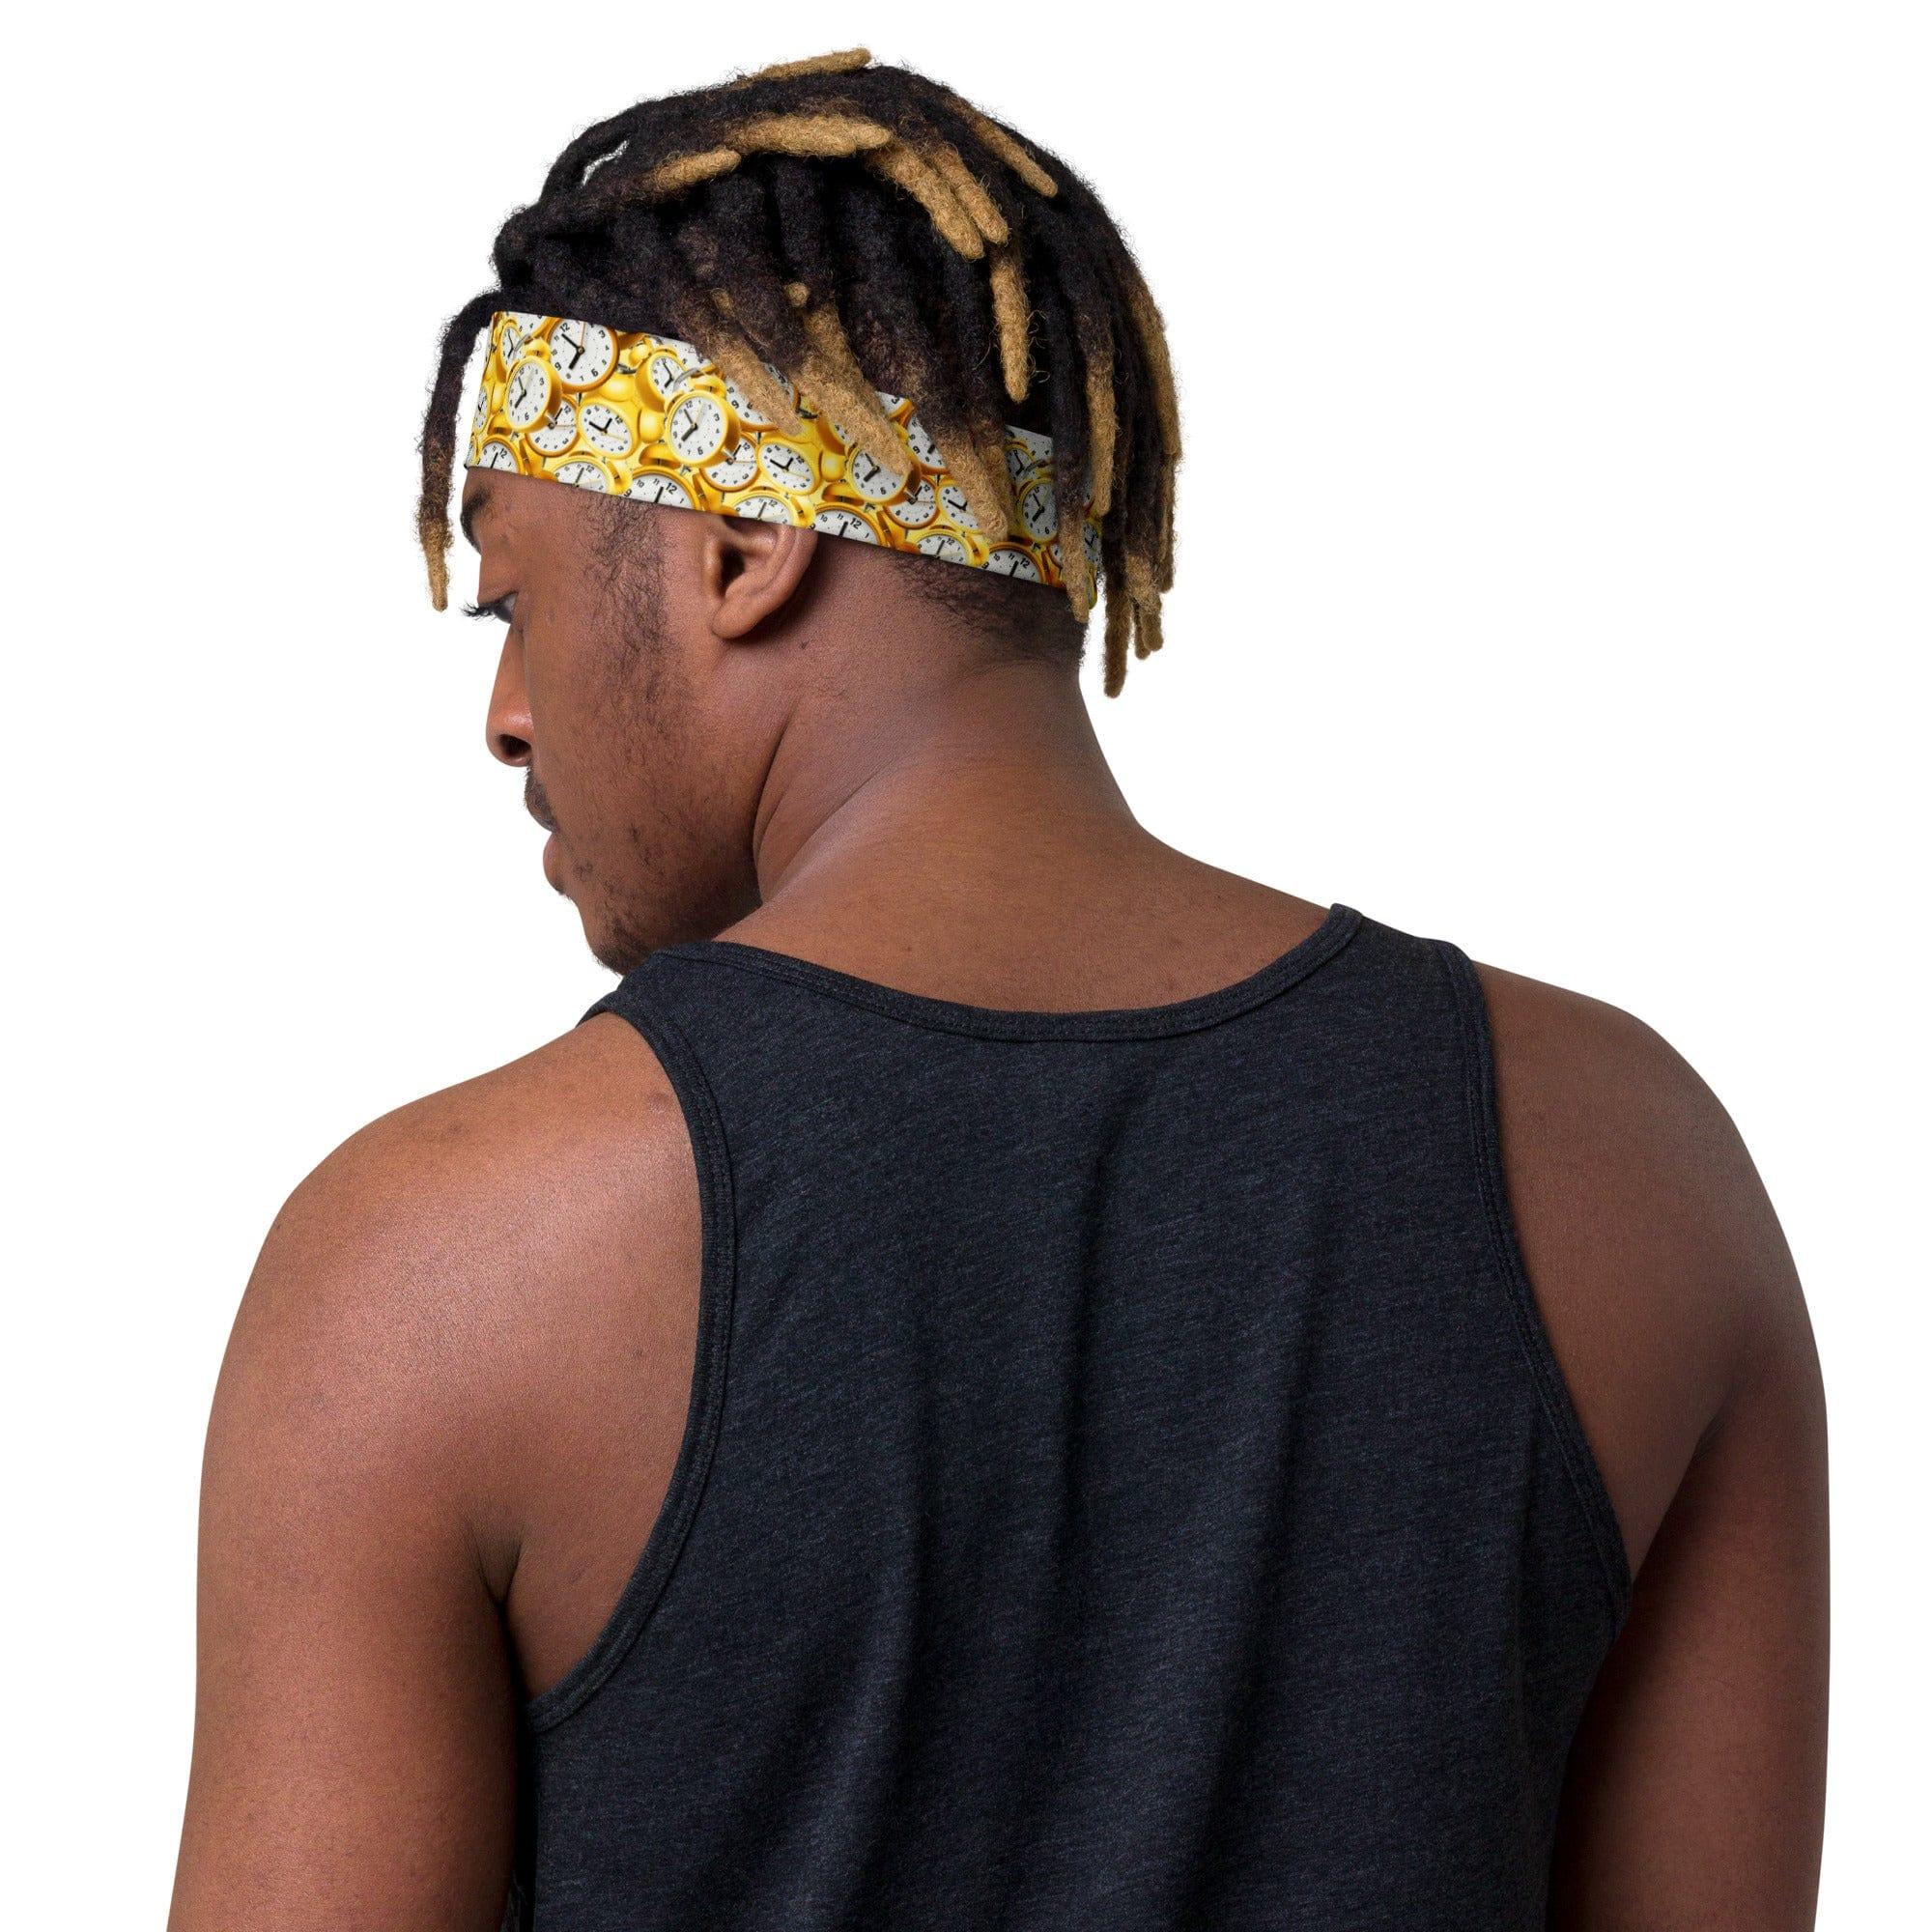 Cool headbands || Alarm Clocks Gold Quick Dry Headband - TopKoalaTee